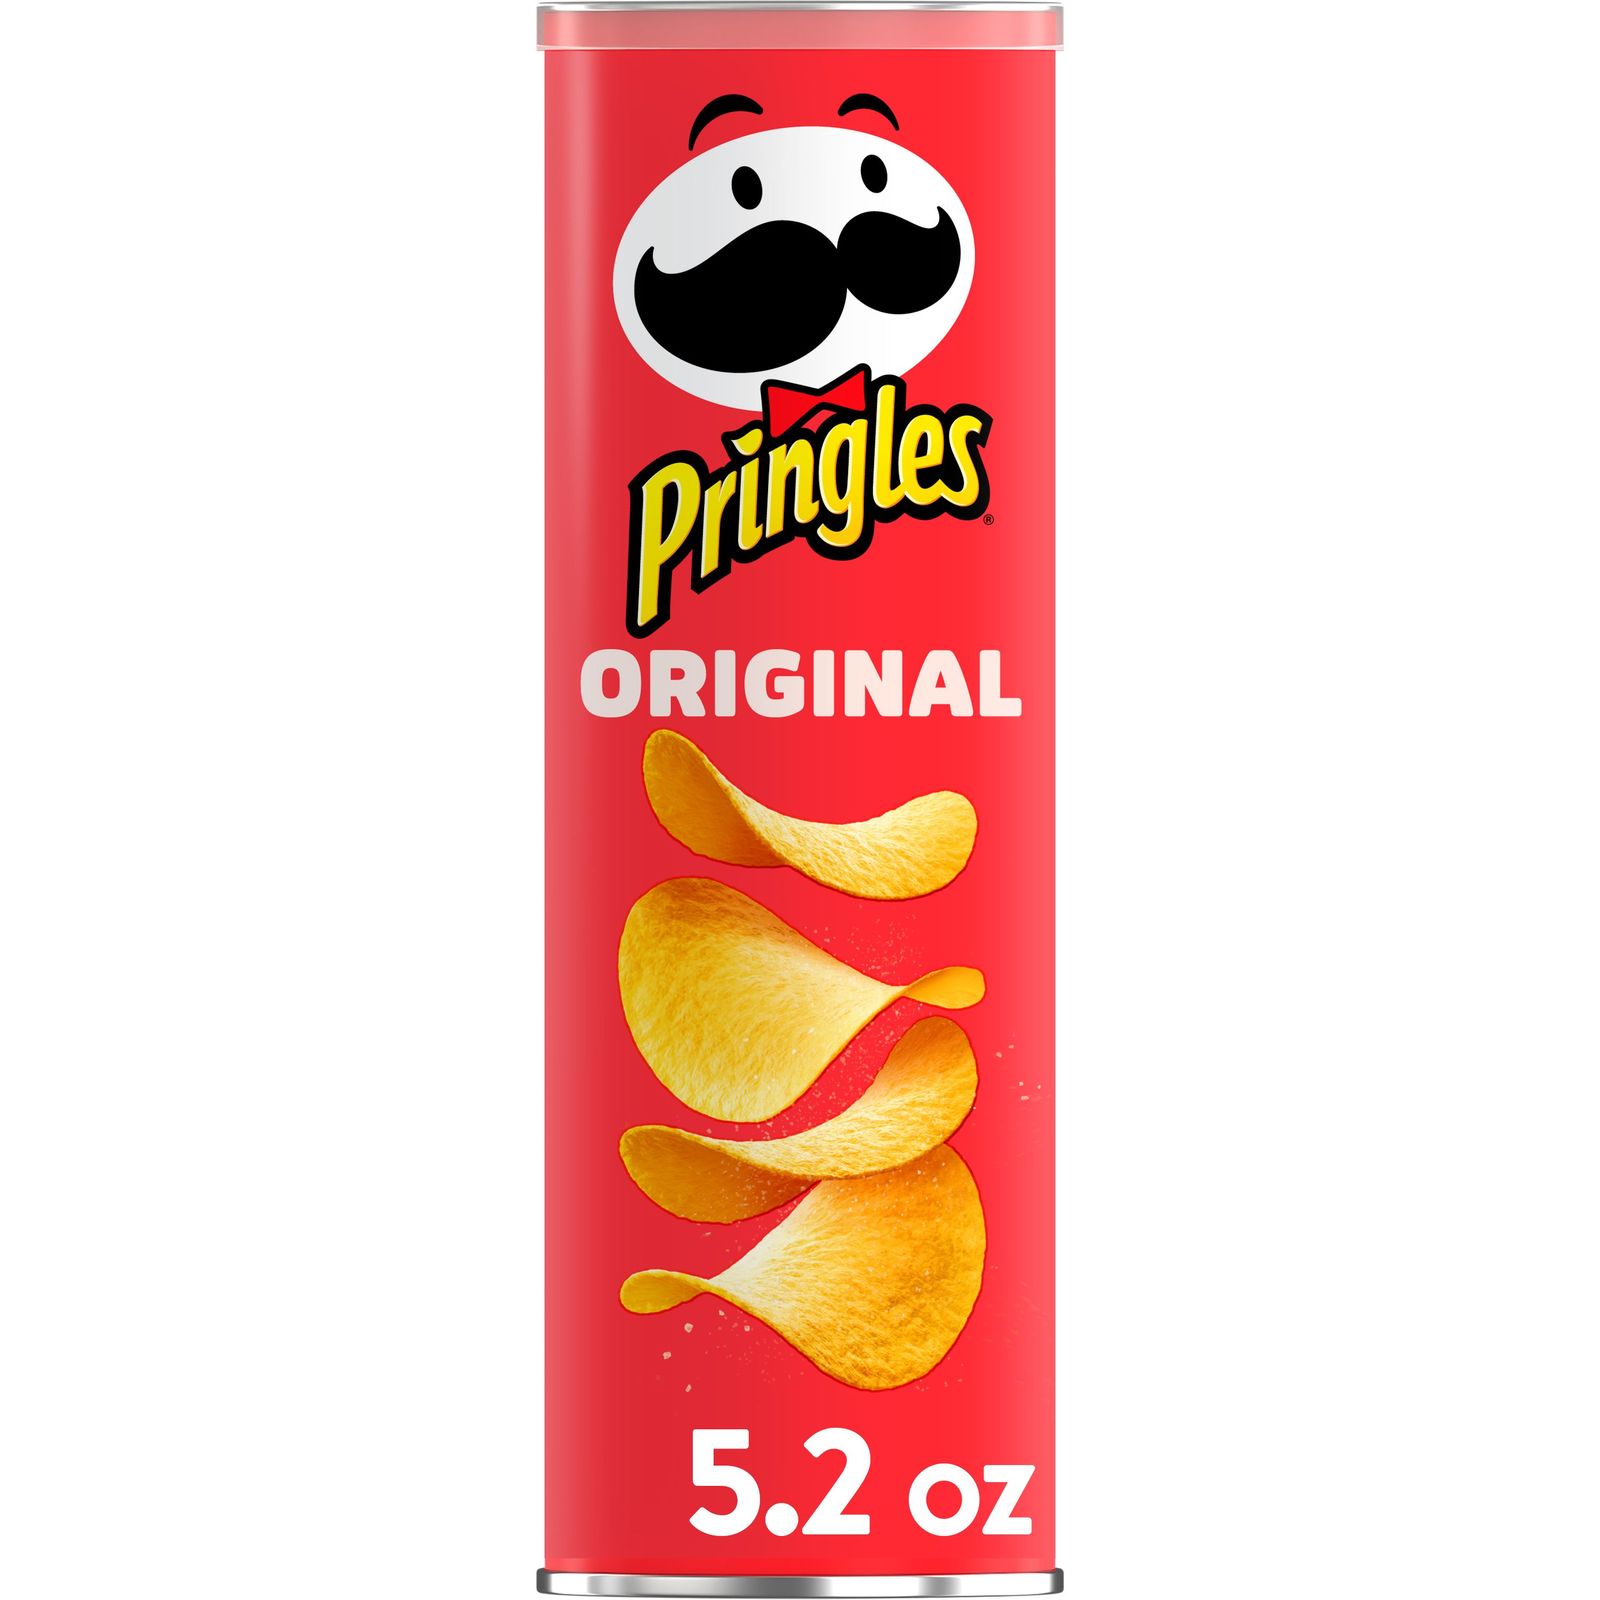 Pringles Original Flavored Potato Crisps Chips Snacks On The Go Canister 5.2 oz.